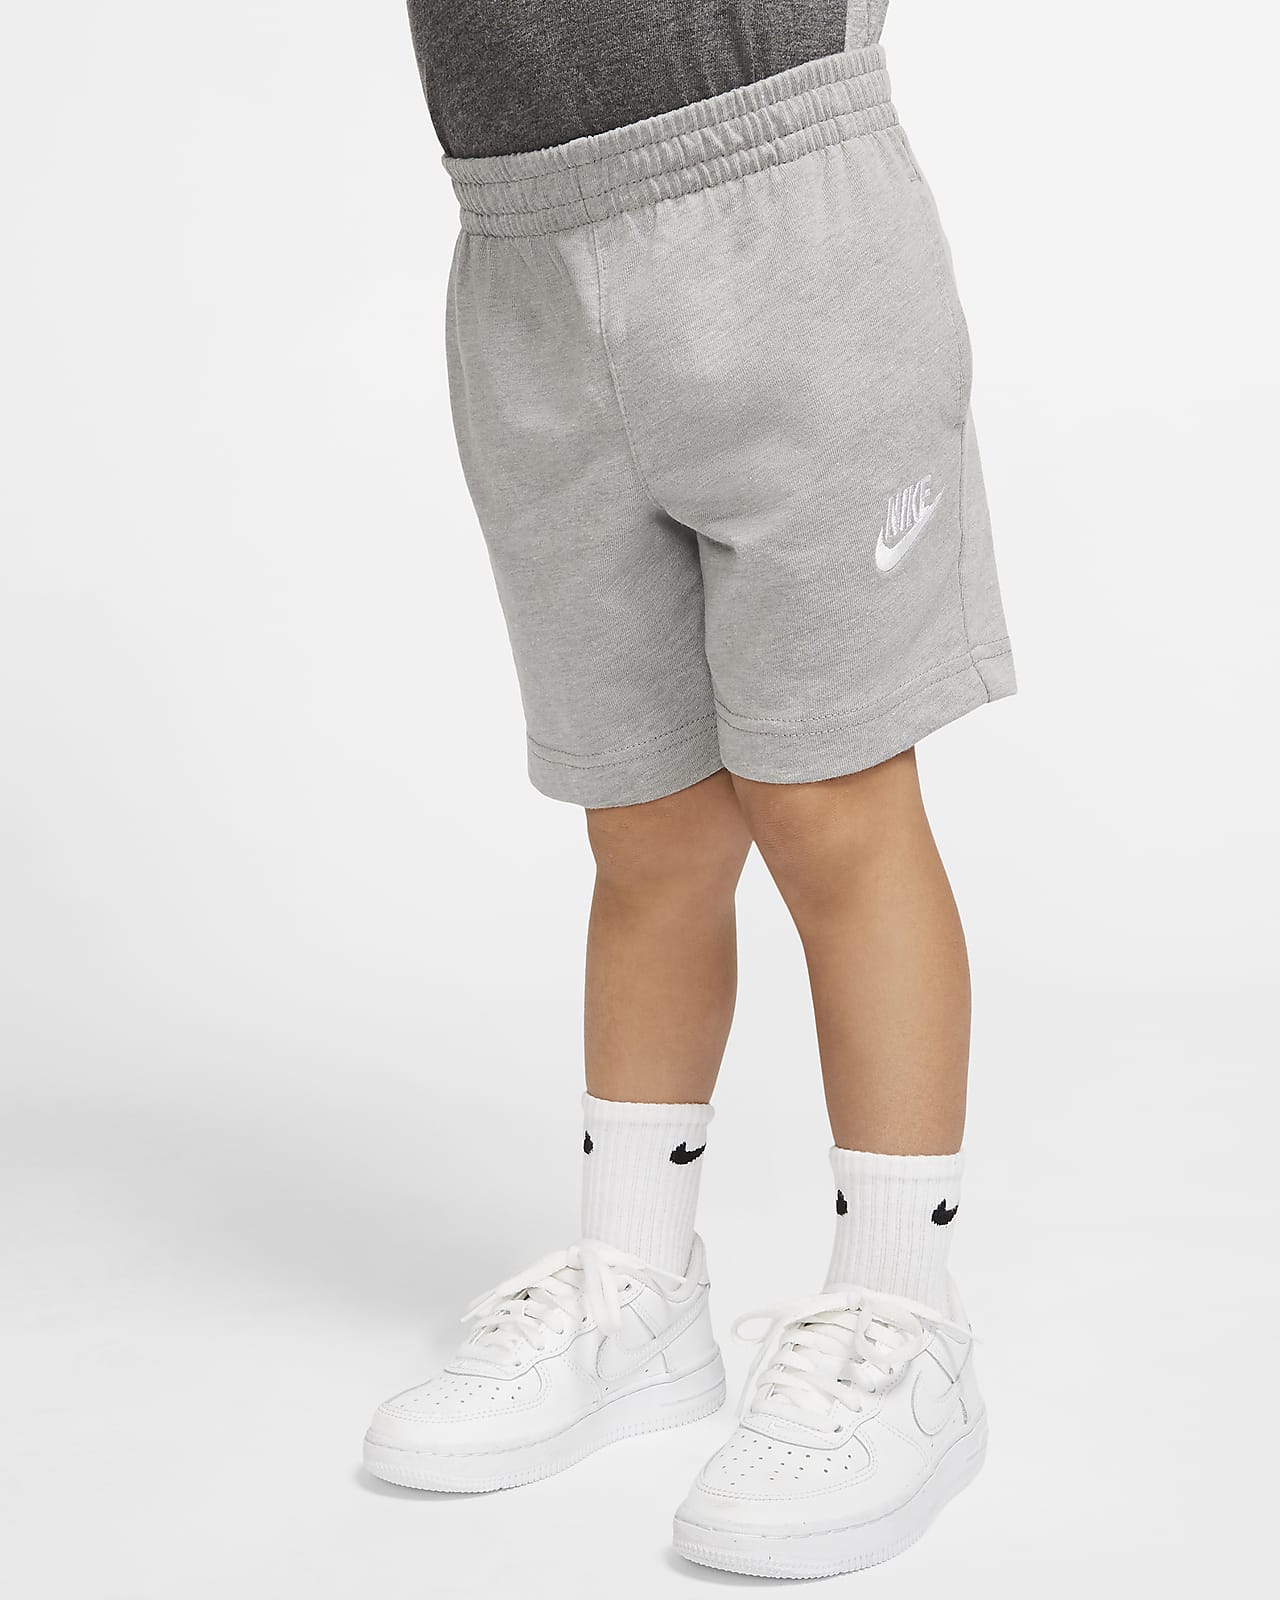 Toddler Shorts. Club Nike Sportswear